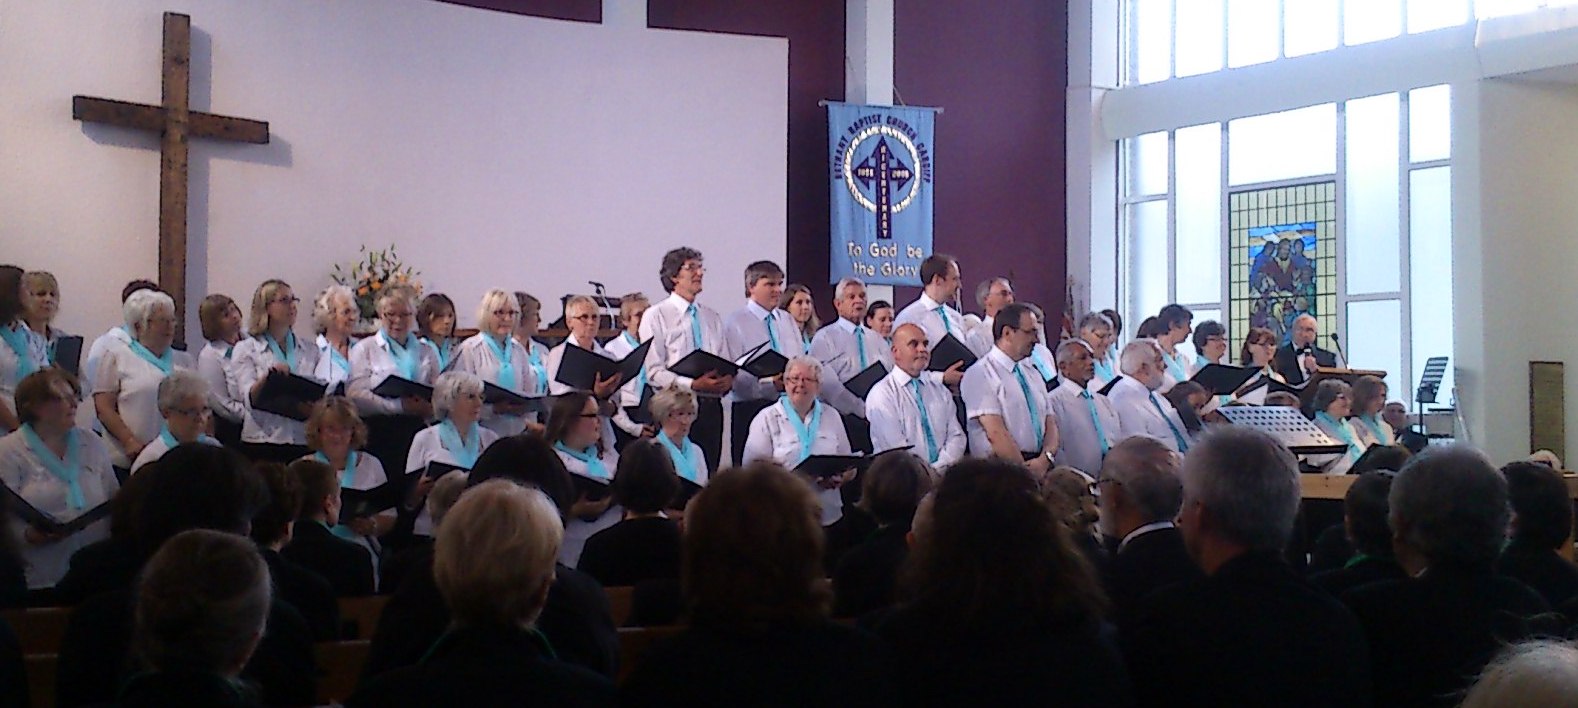 Gabalfa Community Choir cropped